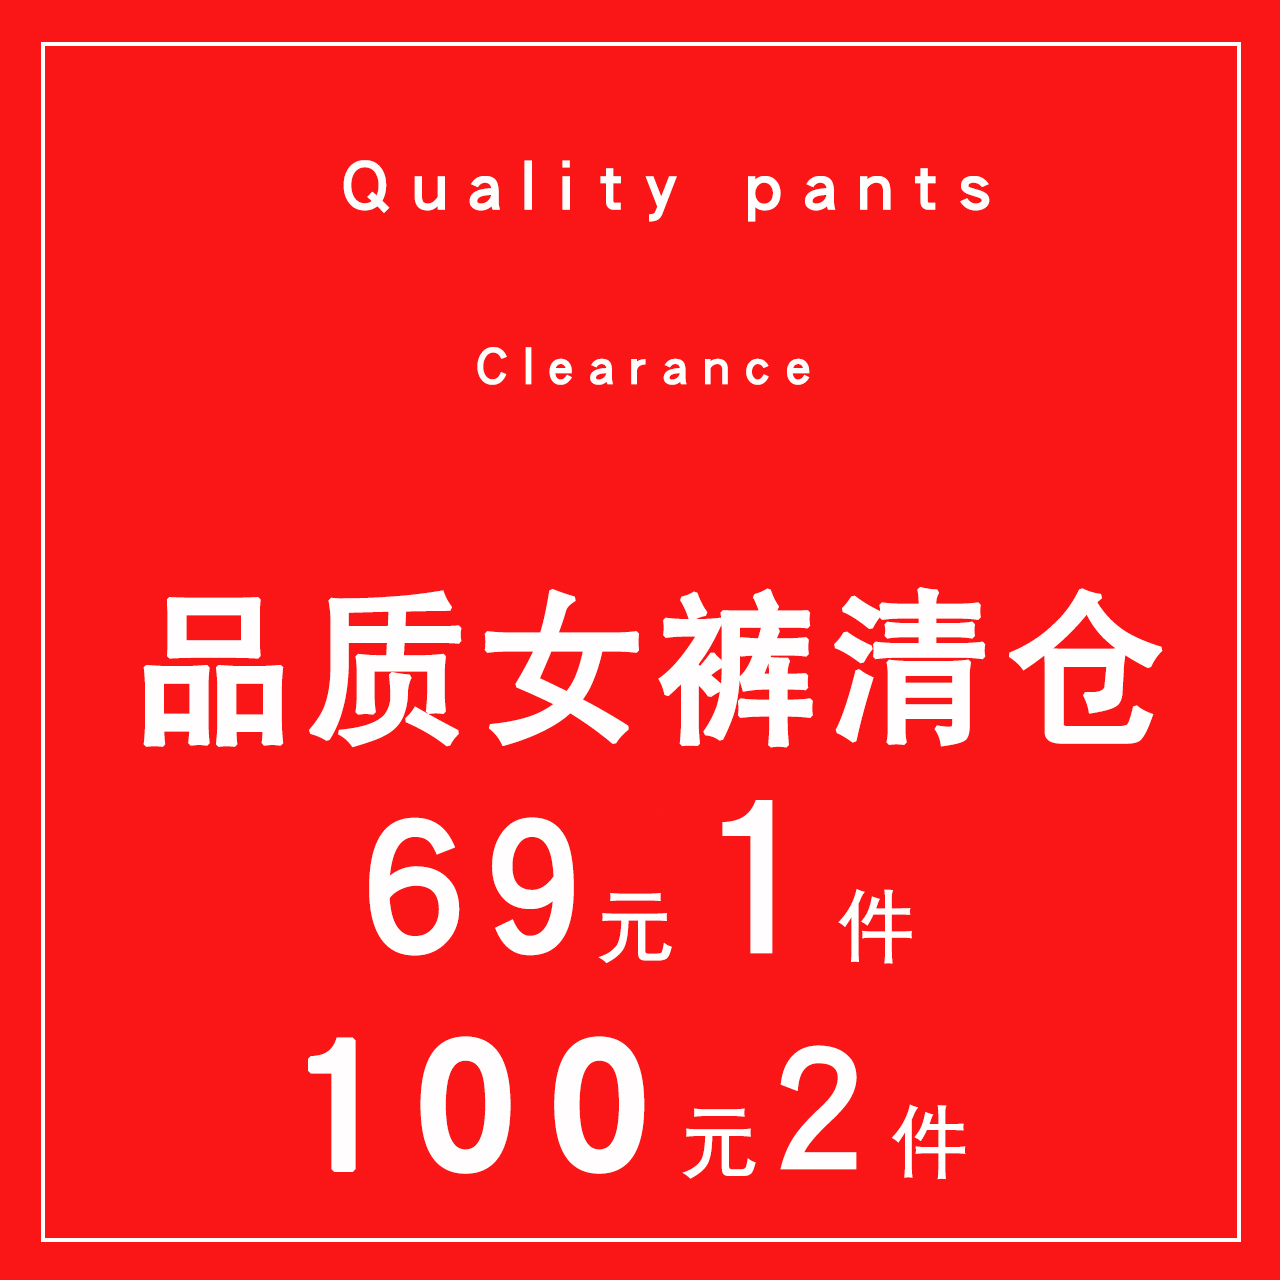 Denim Clearance 69 Pieces 100 2 Pieces Fleece Jeans Women's Autumn and Winter High Waist Dad Pants Look Thin Harem Pants Nine Points